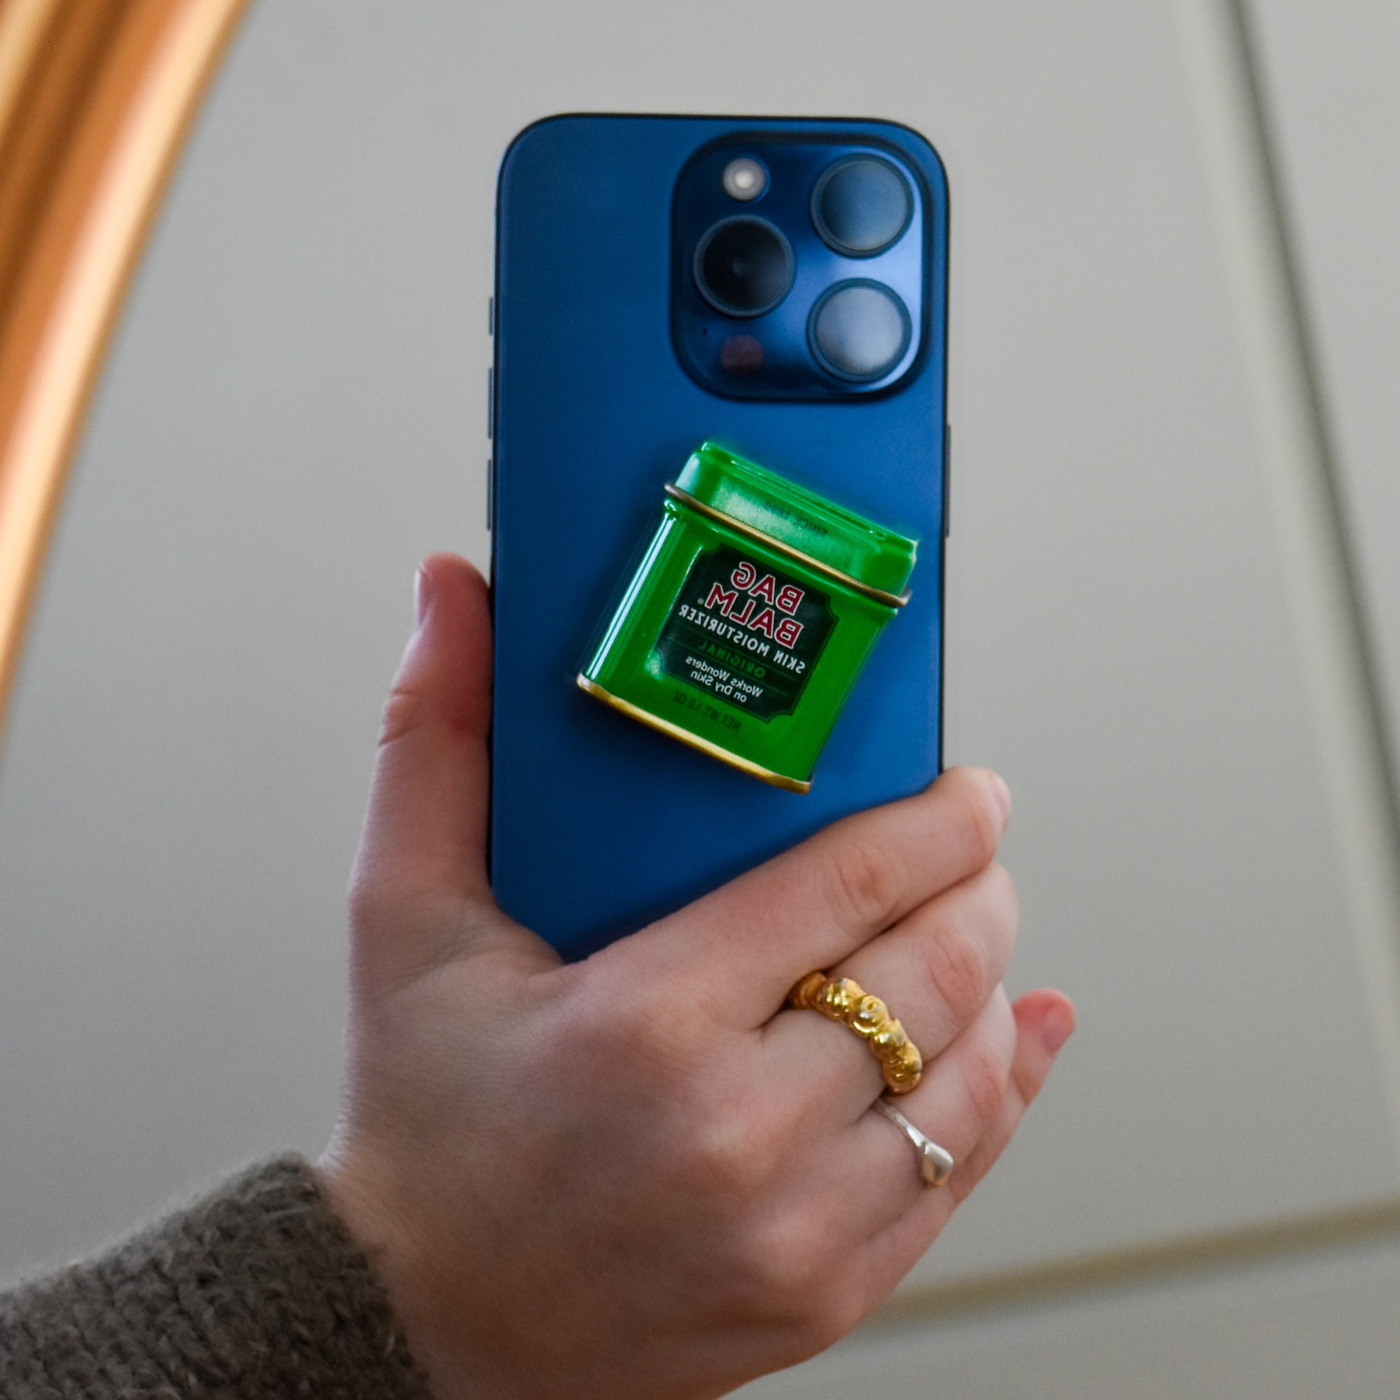 A green Bag Balm pop socket on a blue cell phone case